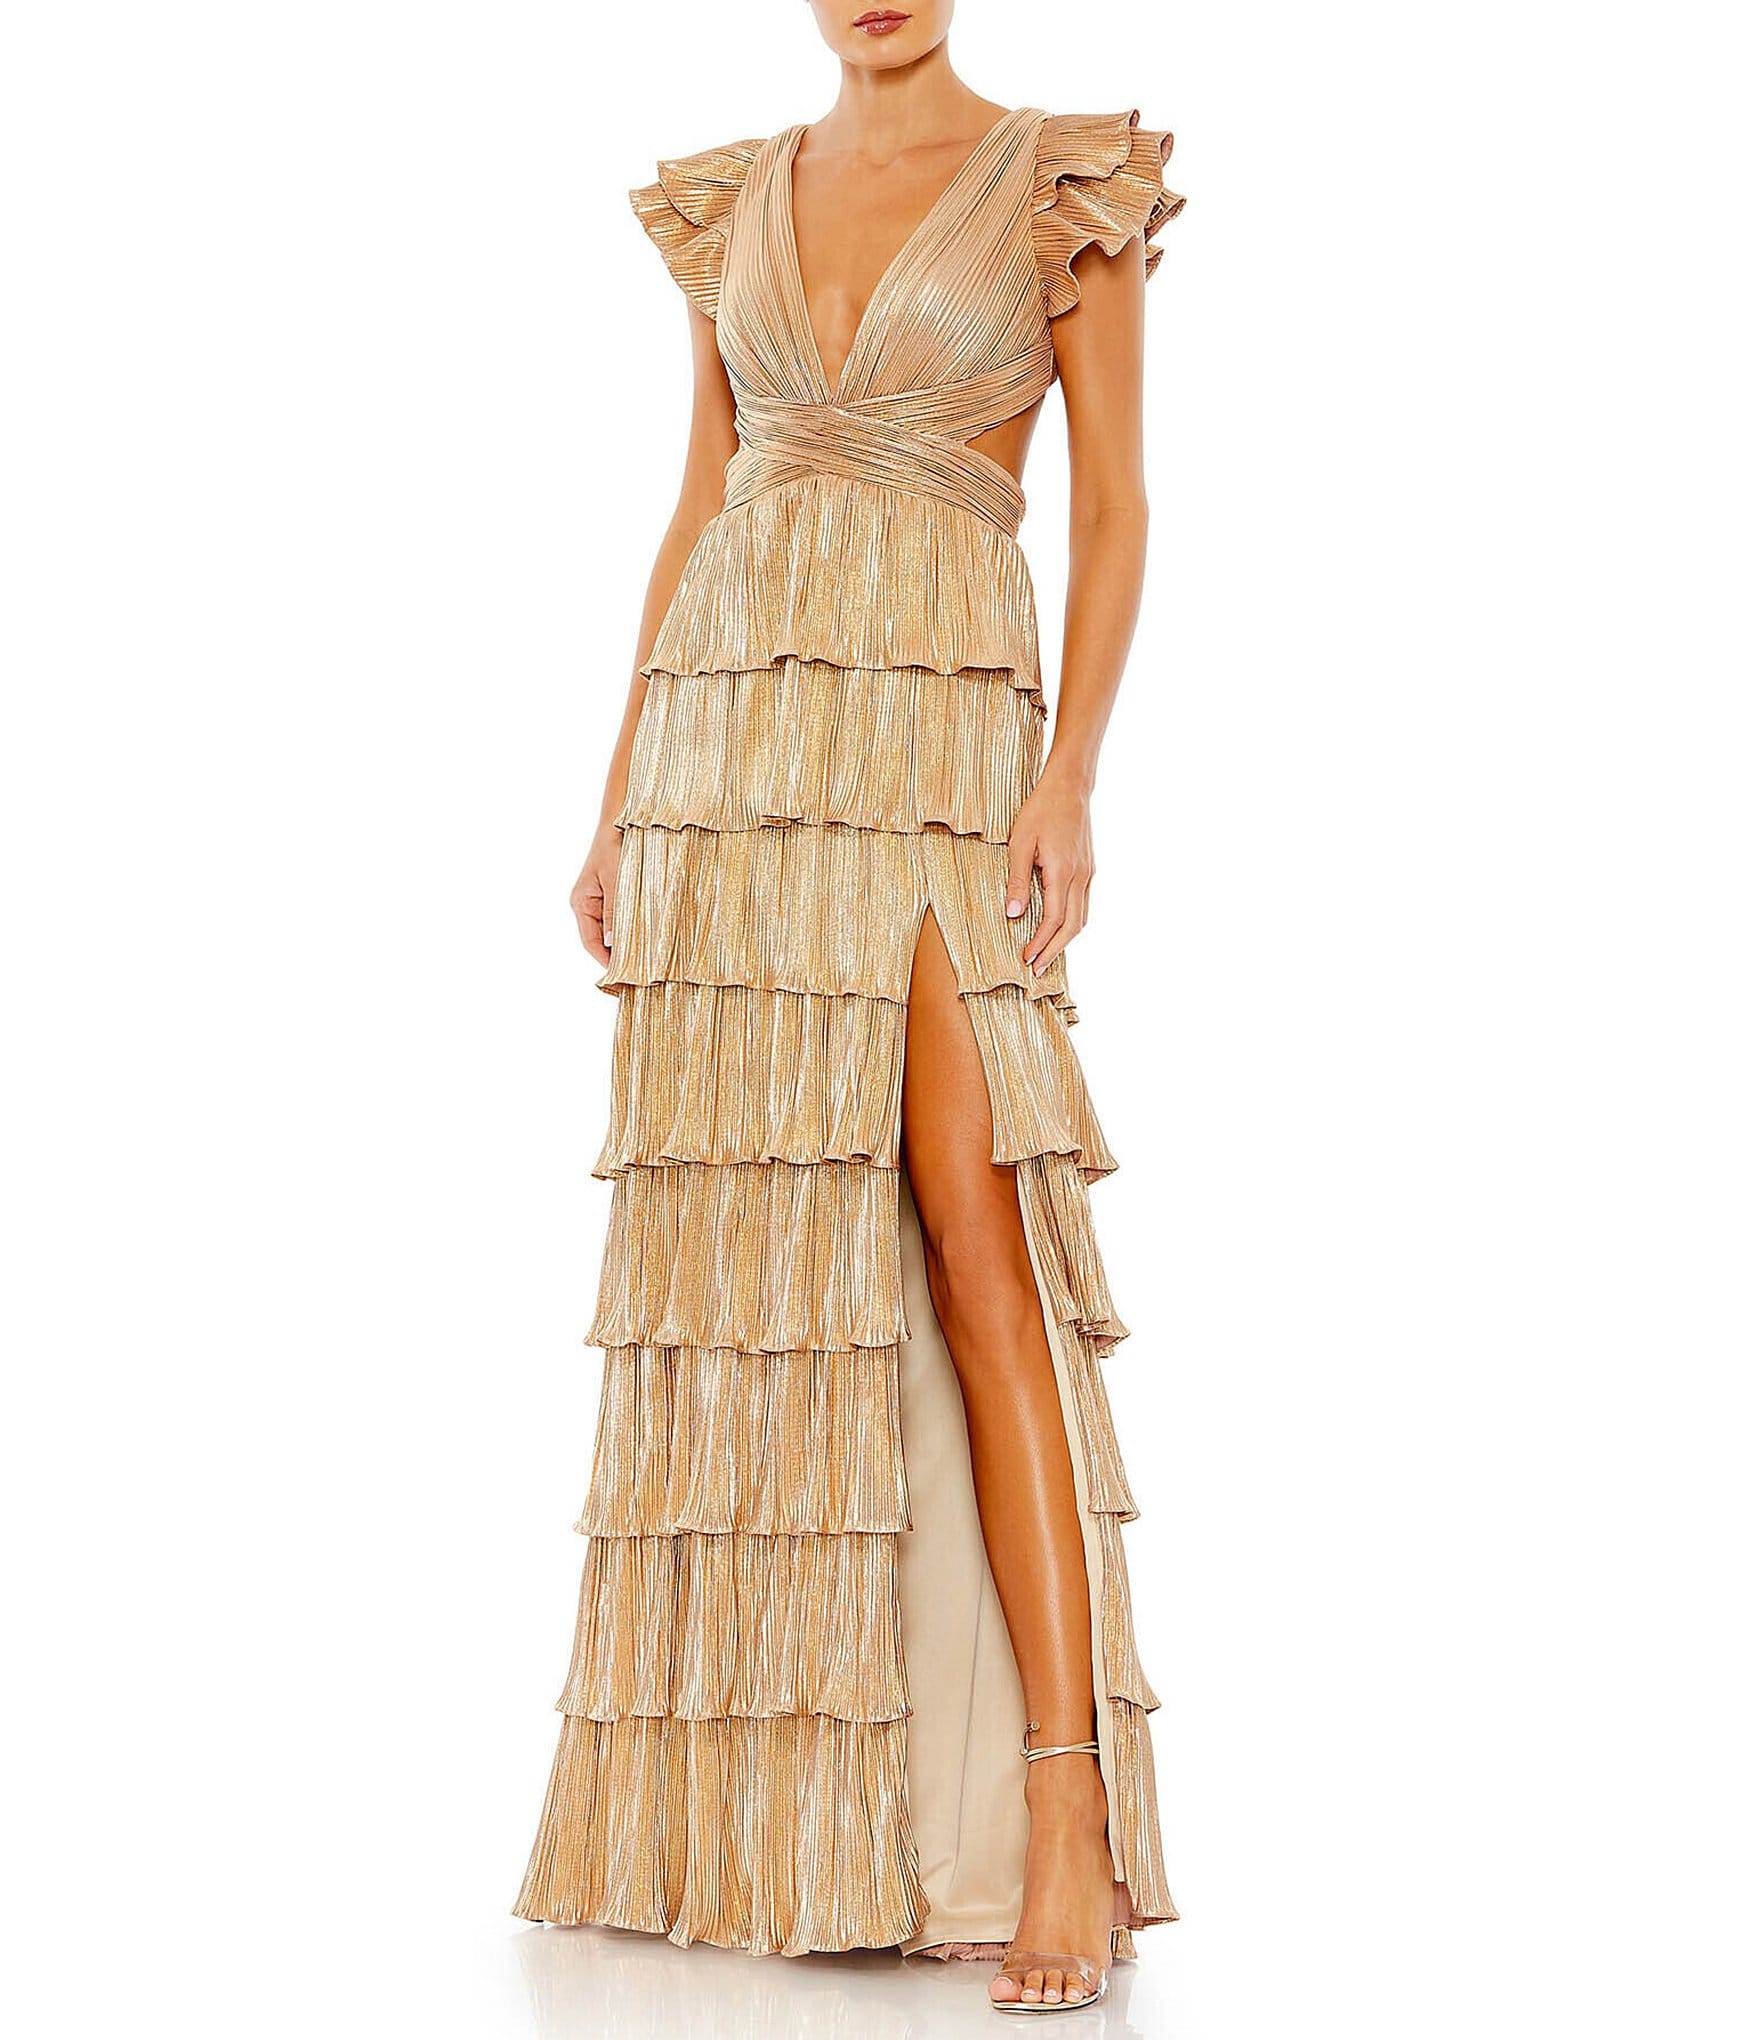 sale adrianna papell: Women's Formal Dresses & Evening Gowns | Dillard's